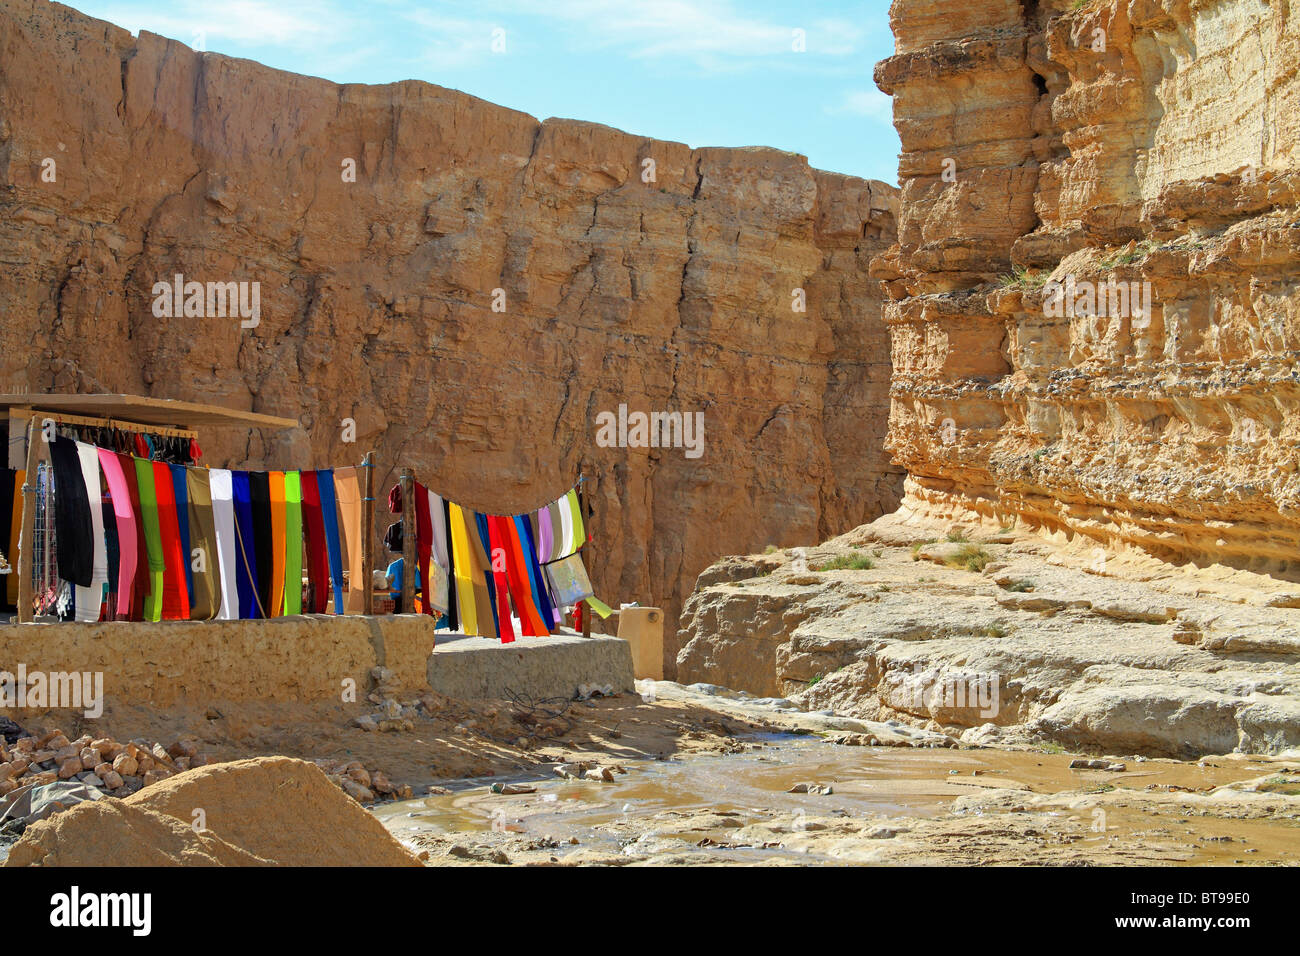 Desert scenery, near Tamerza, in the Sahara desert of western Tunisia Stock Photo